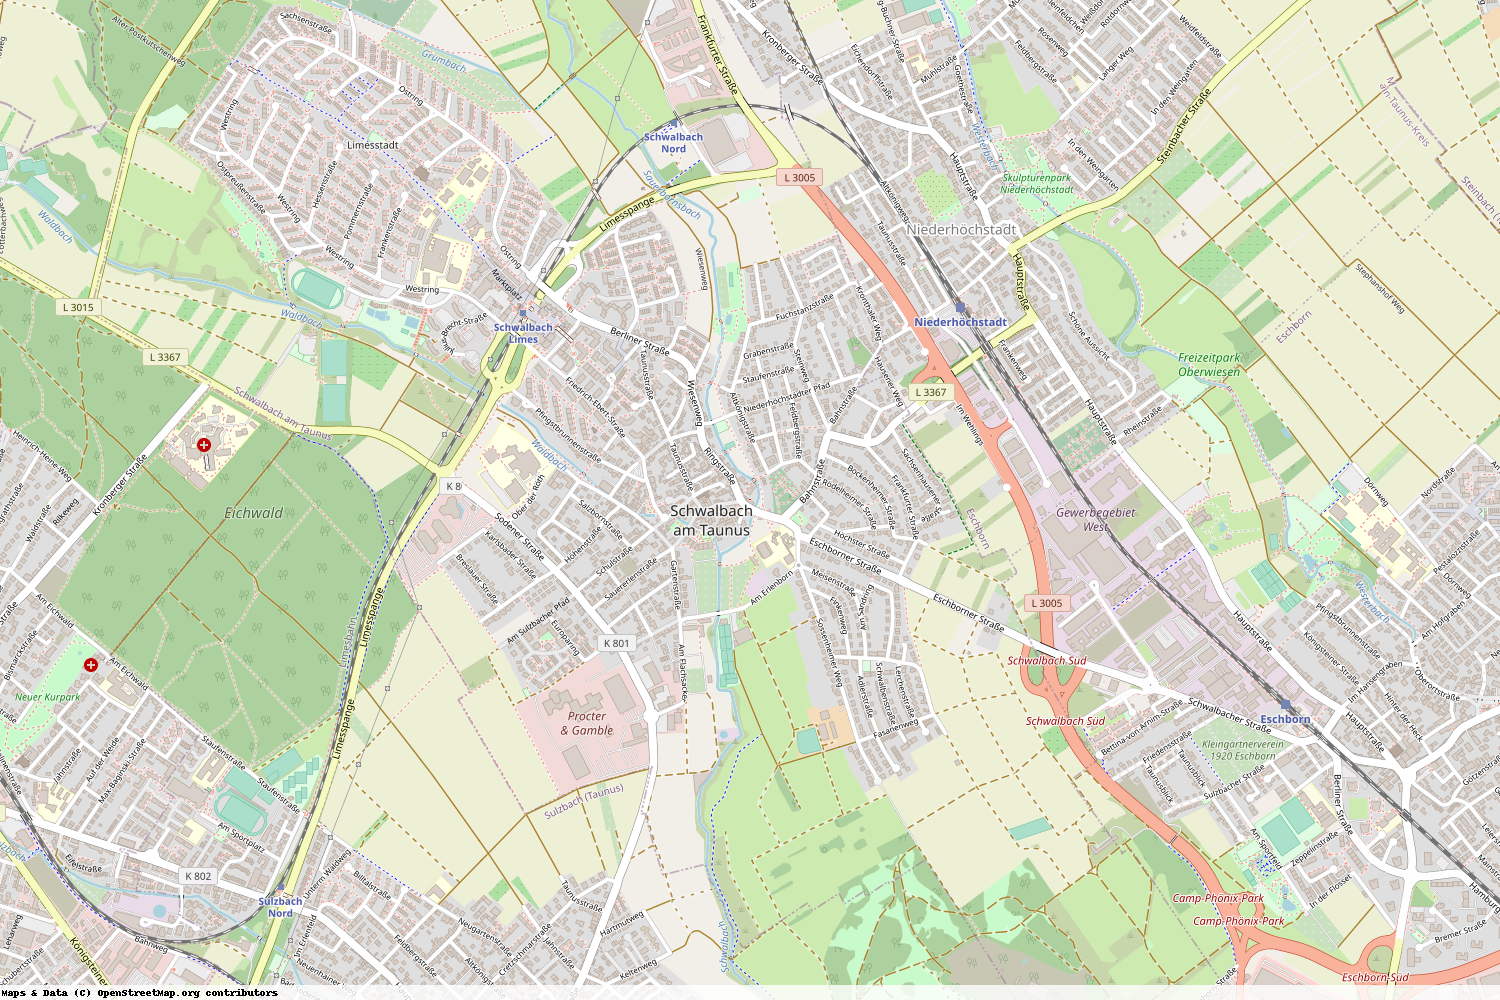 Ist gerade Stromausfall in Hessen - Main-Taunus-Kreis - Schwalbach am Taunus?